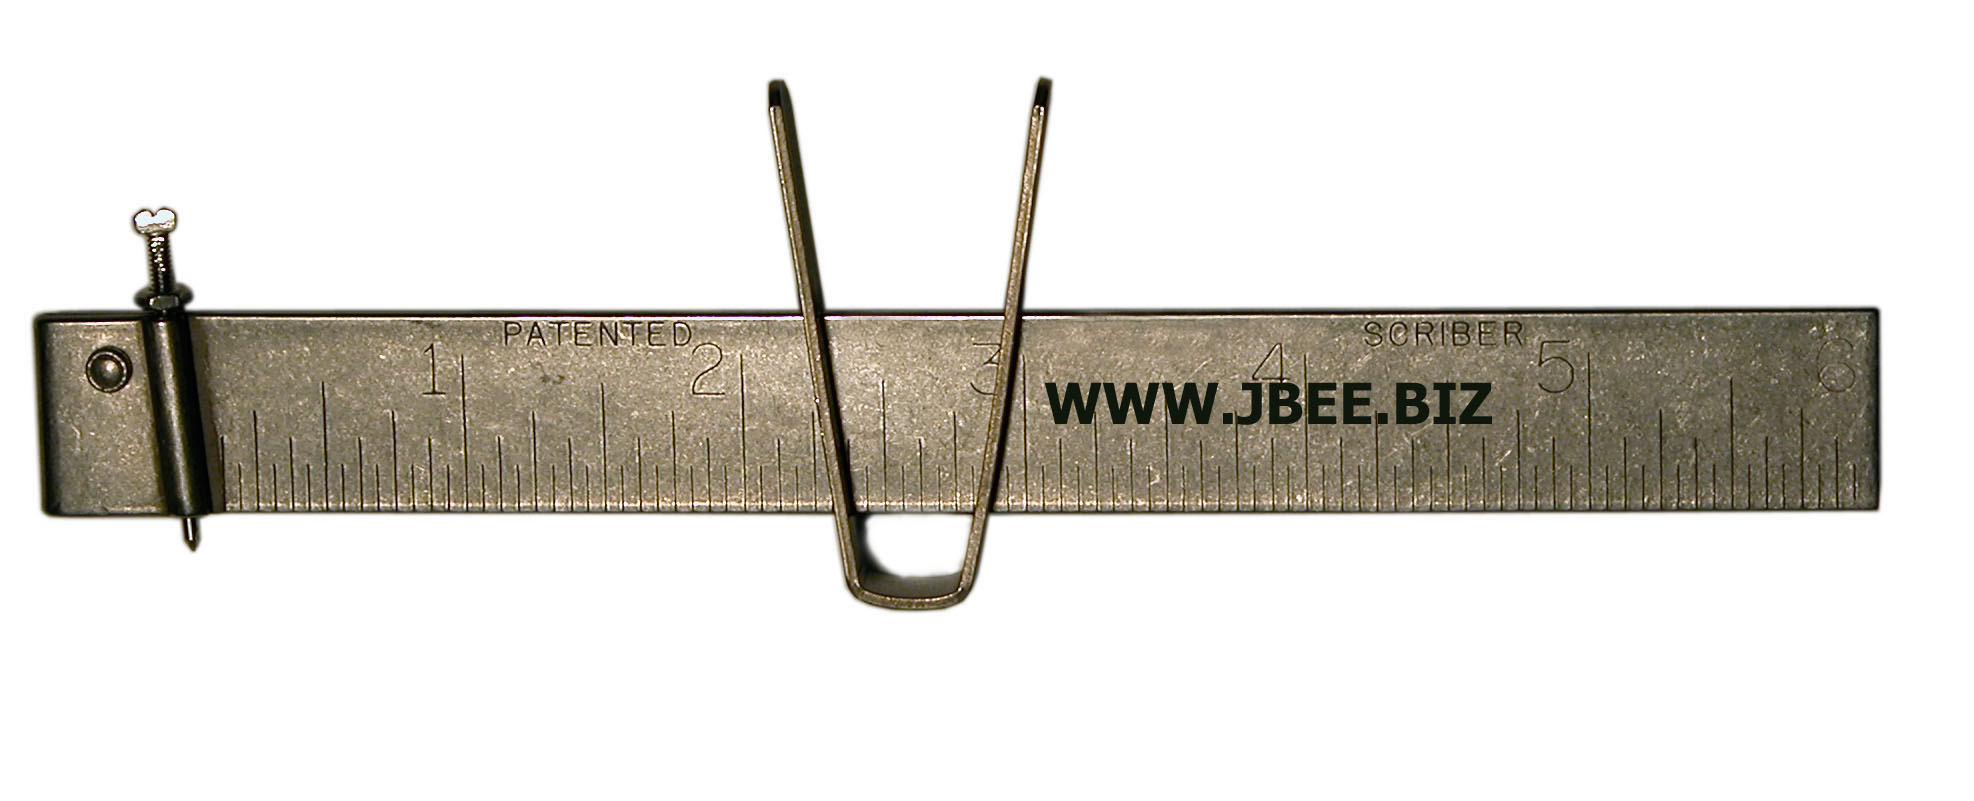 Scriber SC1 Stainless Steel 6 - J Bee Enterprises